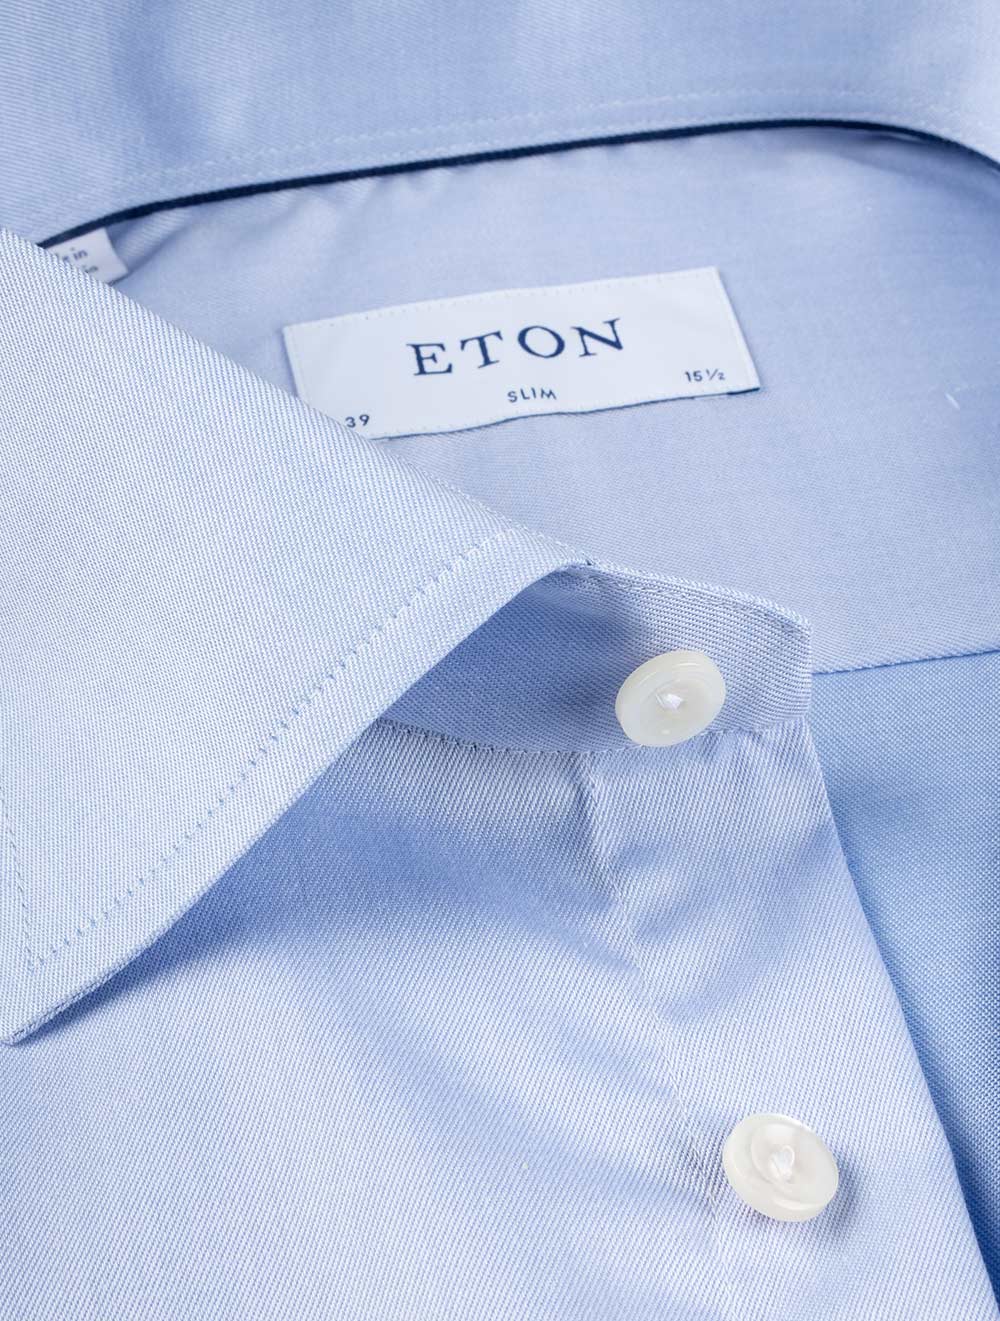 Eton Blue Double Cuff Slim Fit Shirt Blue